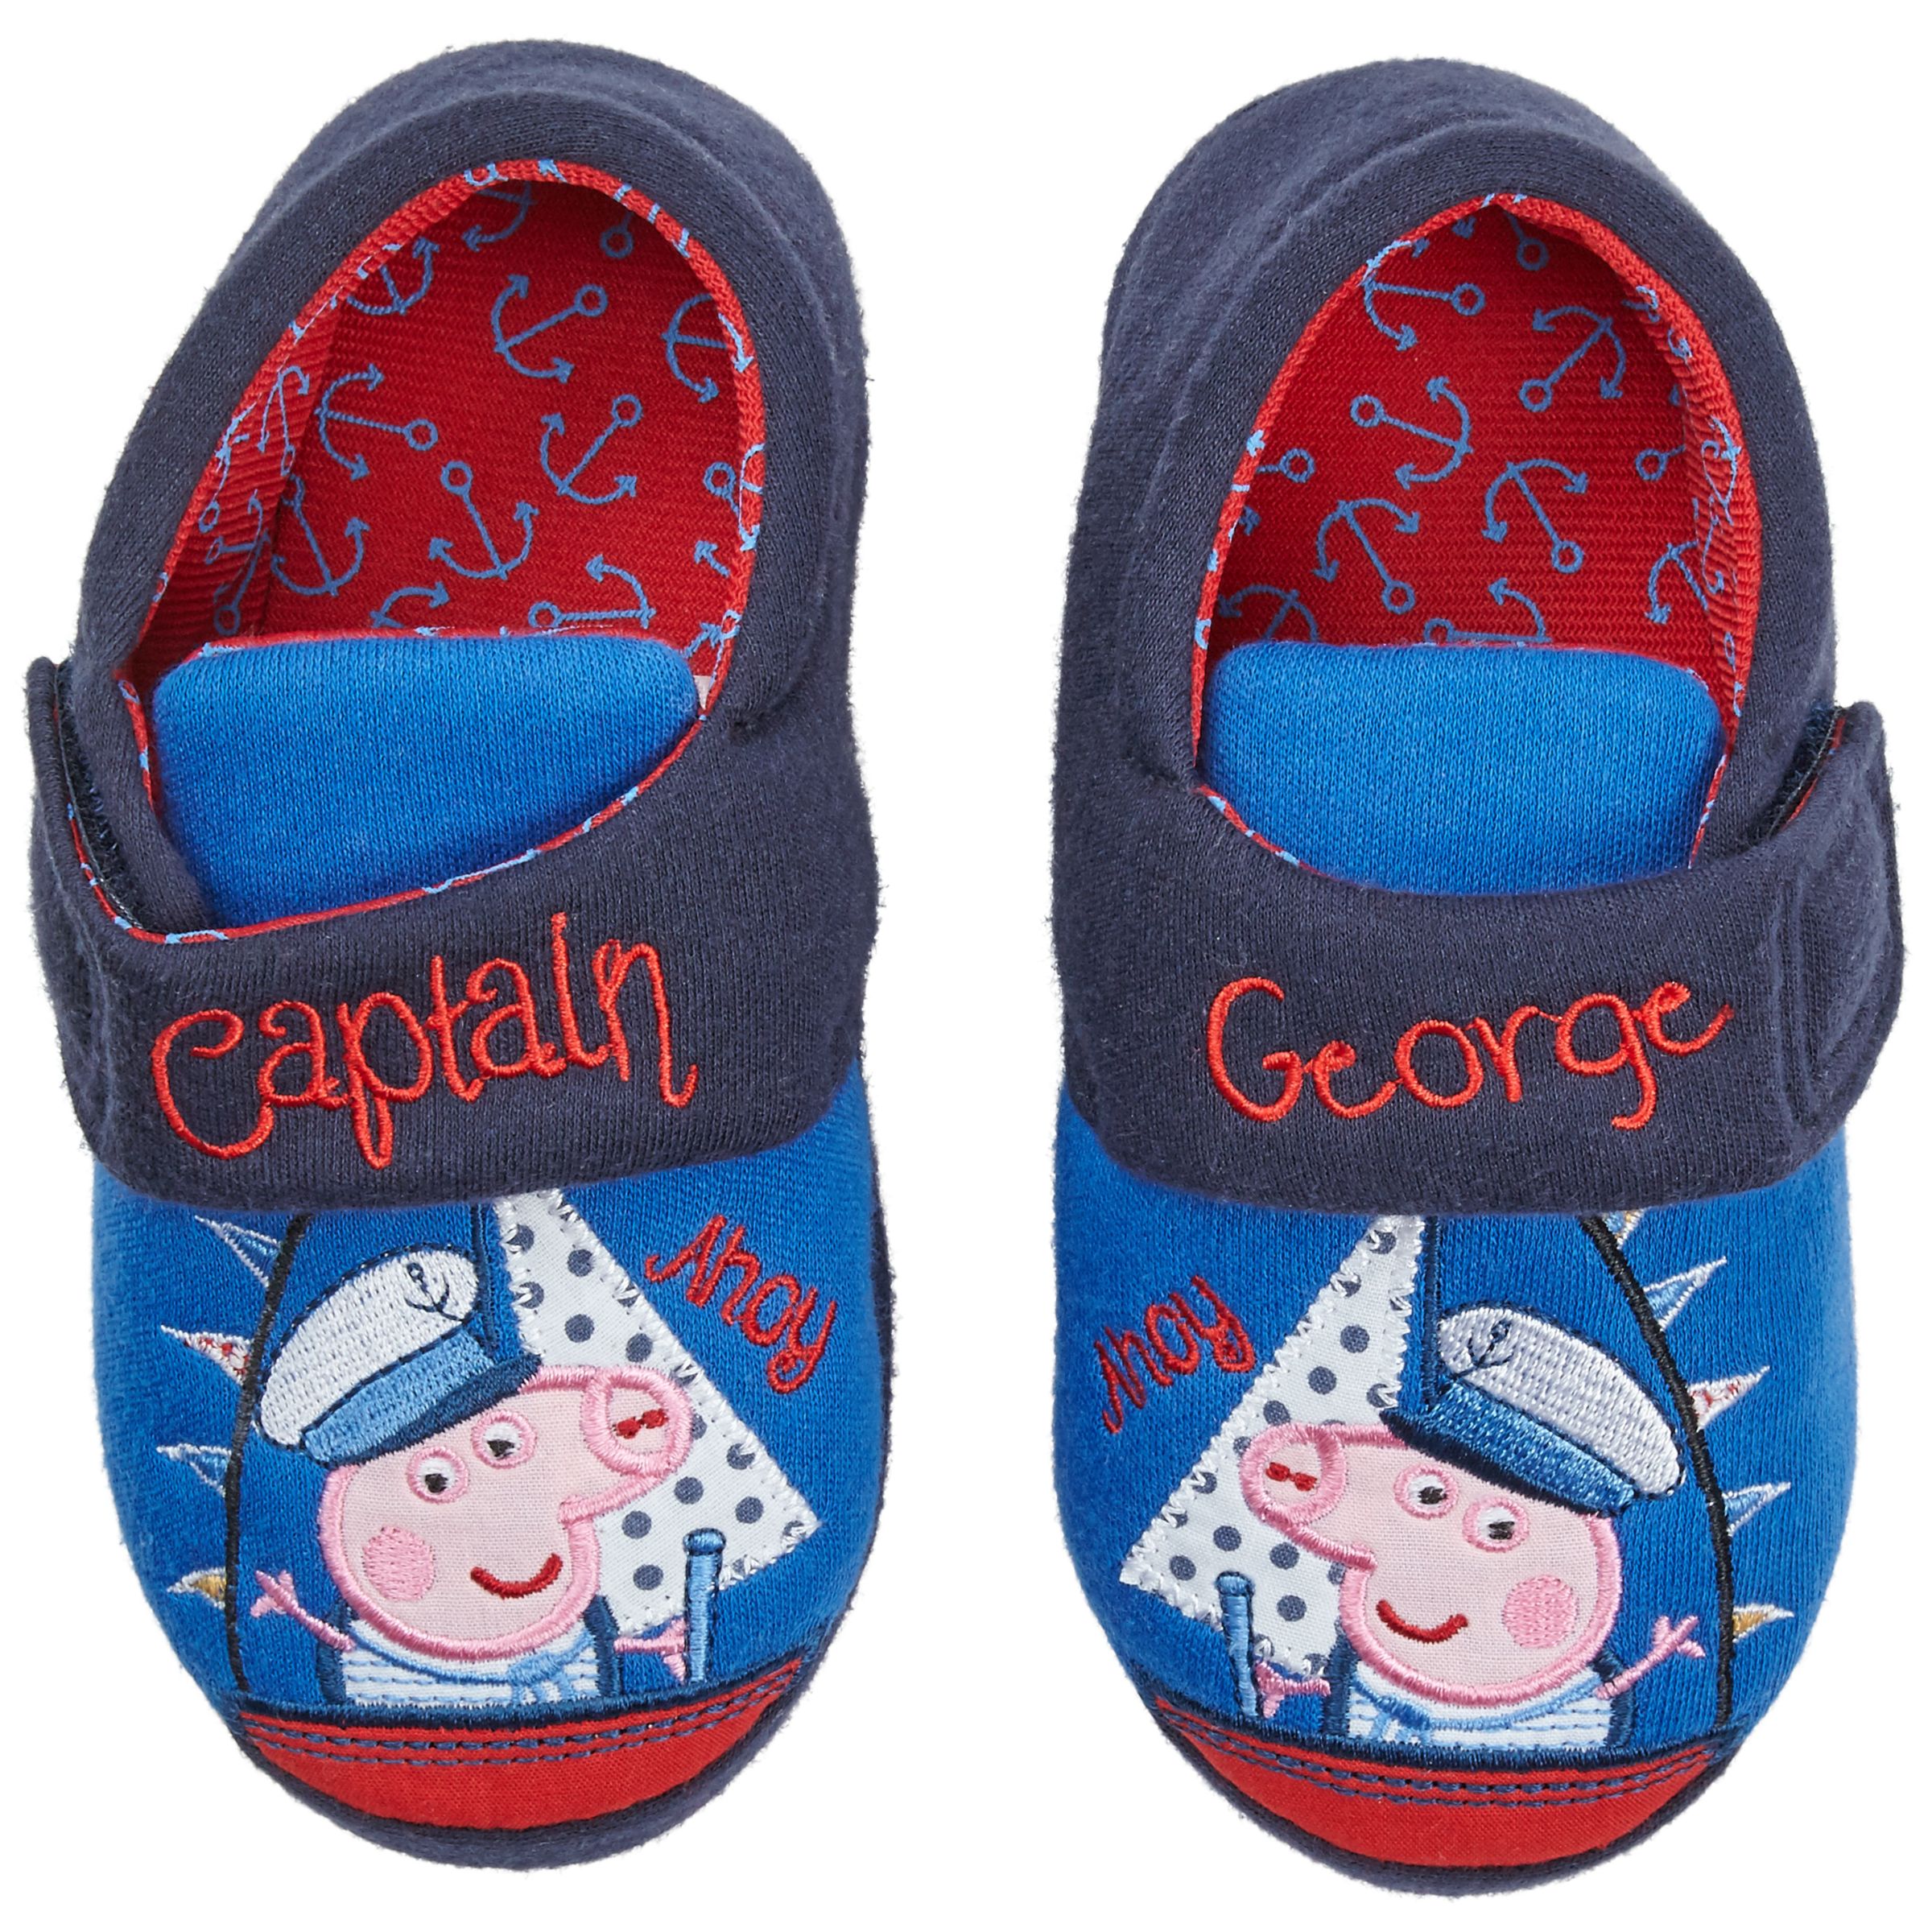 george kids slippers